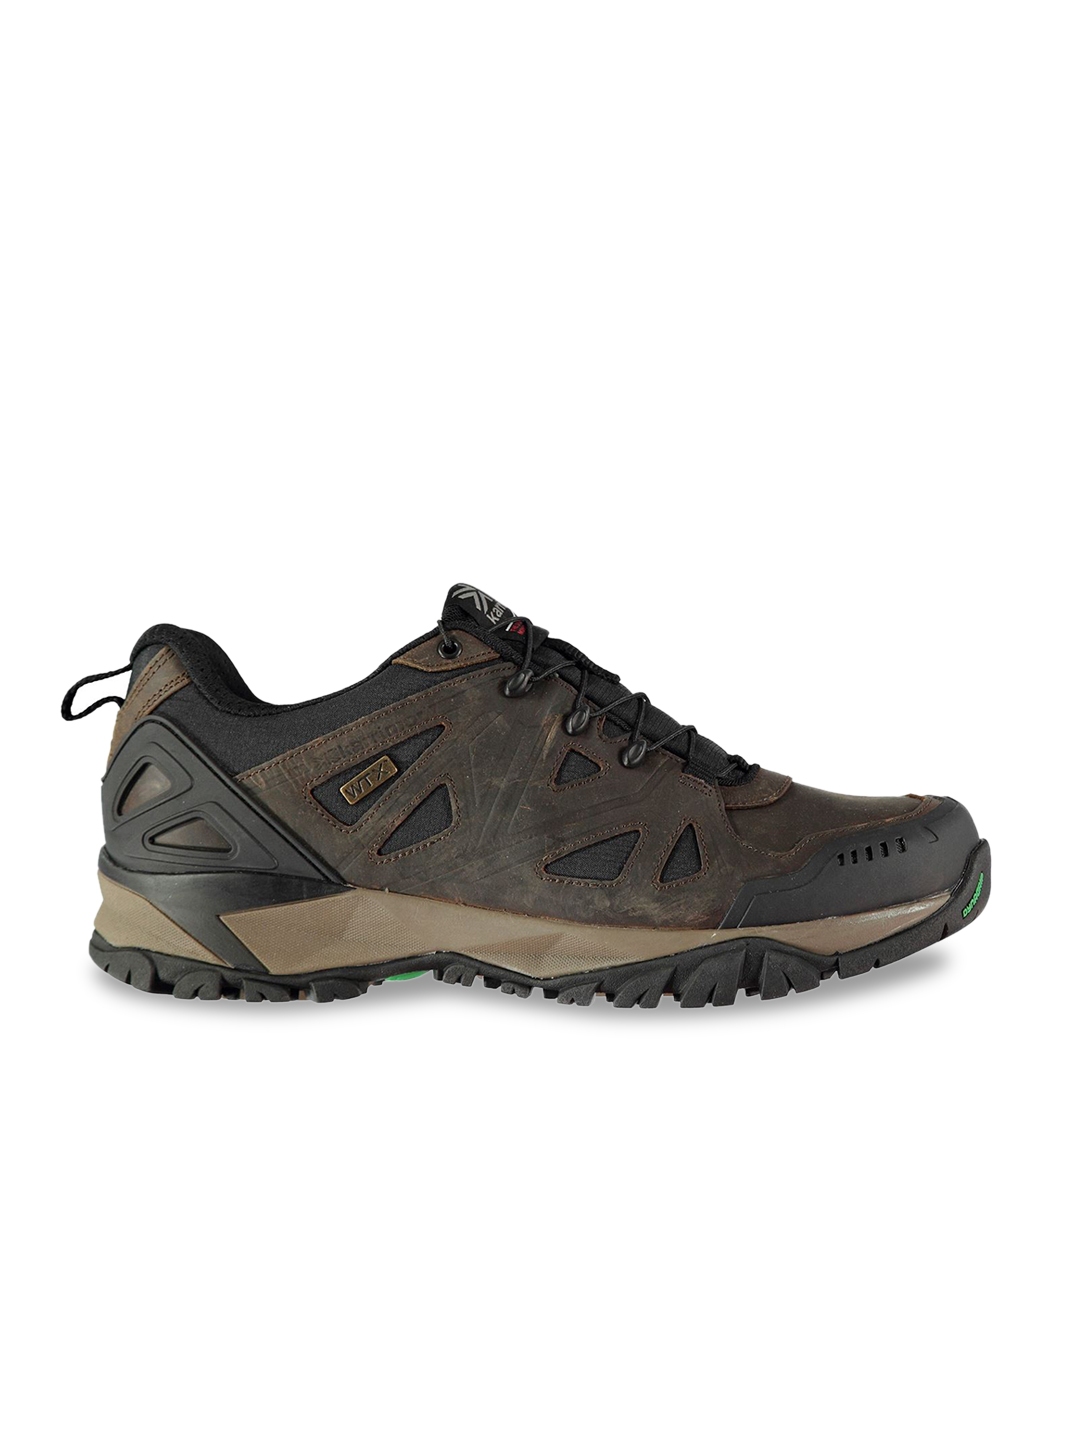 Buy Karrimor Men Brown Leather Walking Shoes - Sports Shoes for Men ...